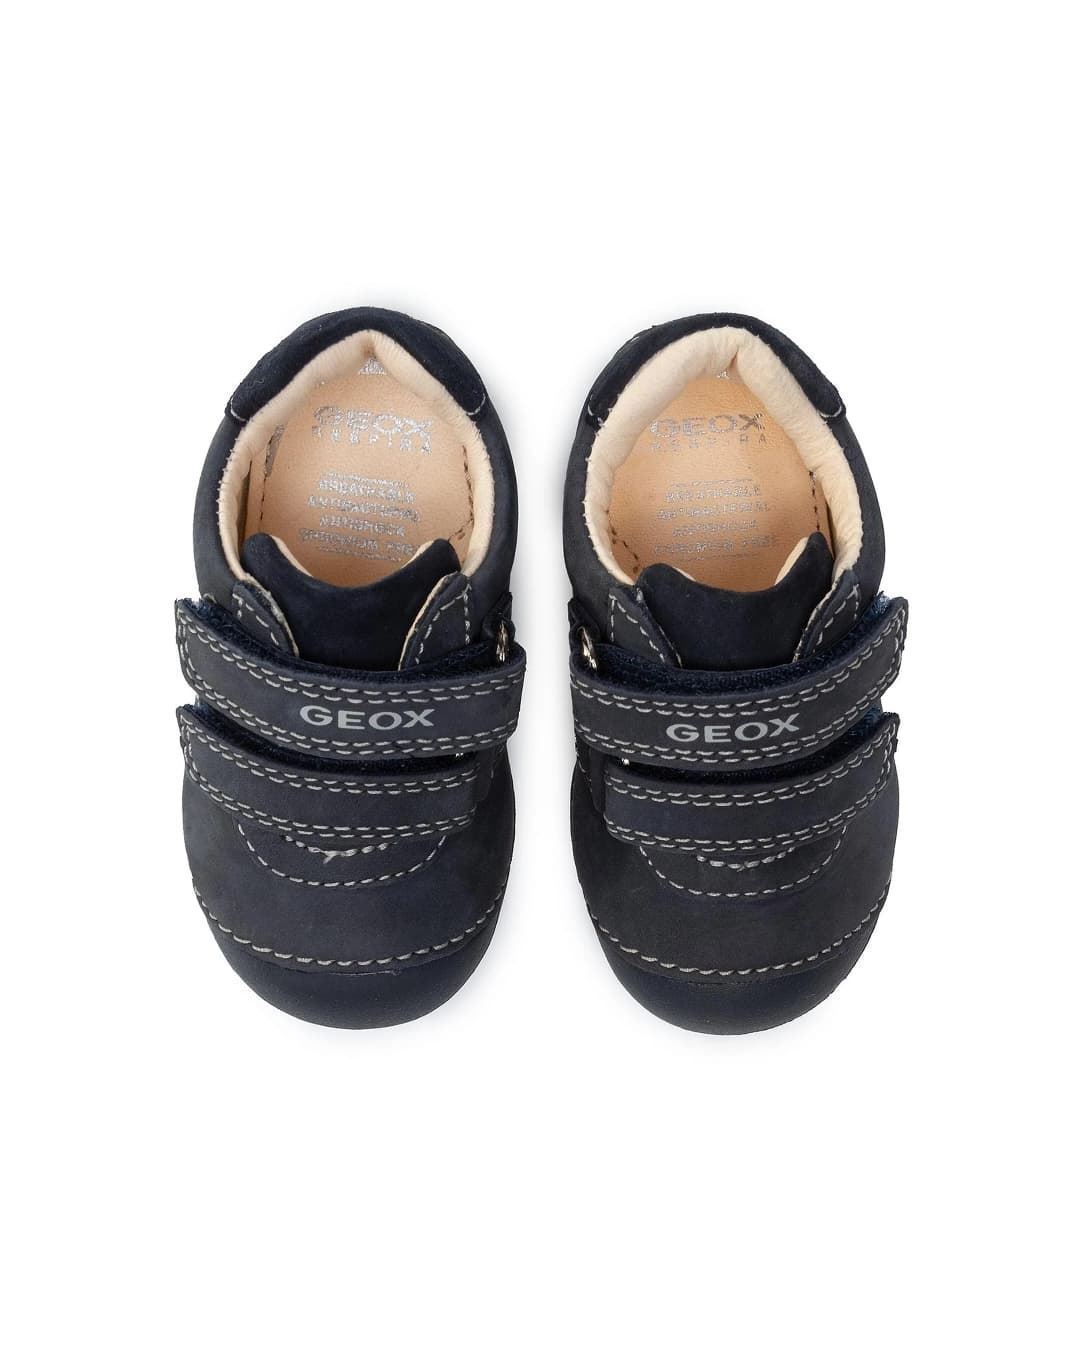 Geox Tutim Baby Respectful Shoe Navy Blue - Image 3